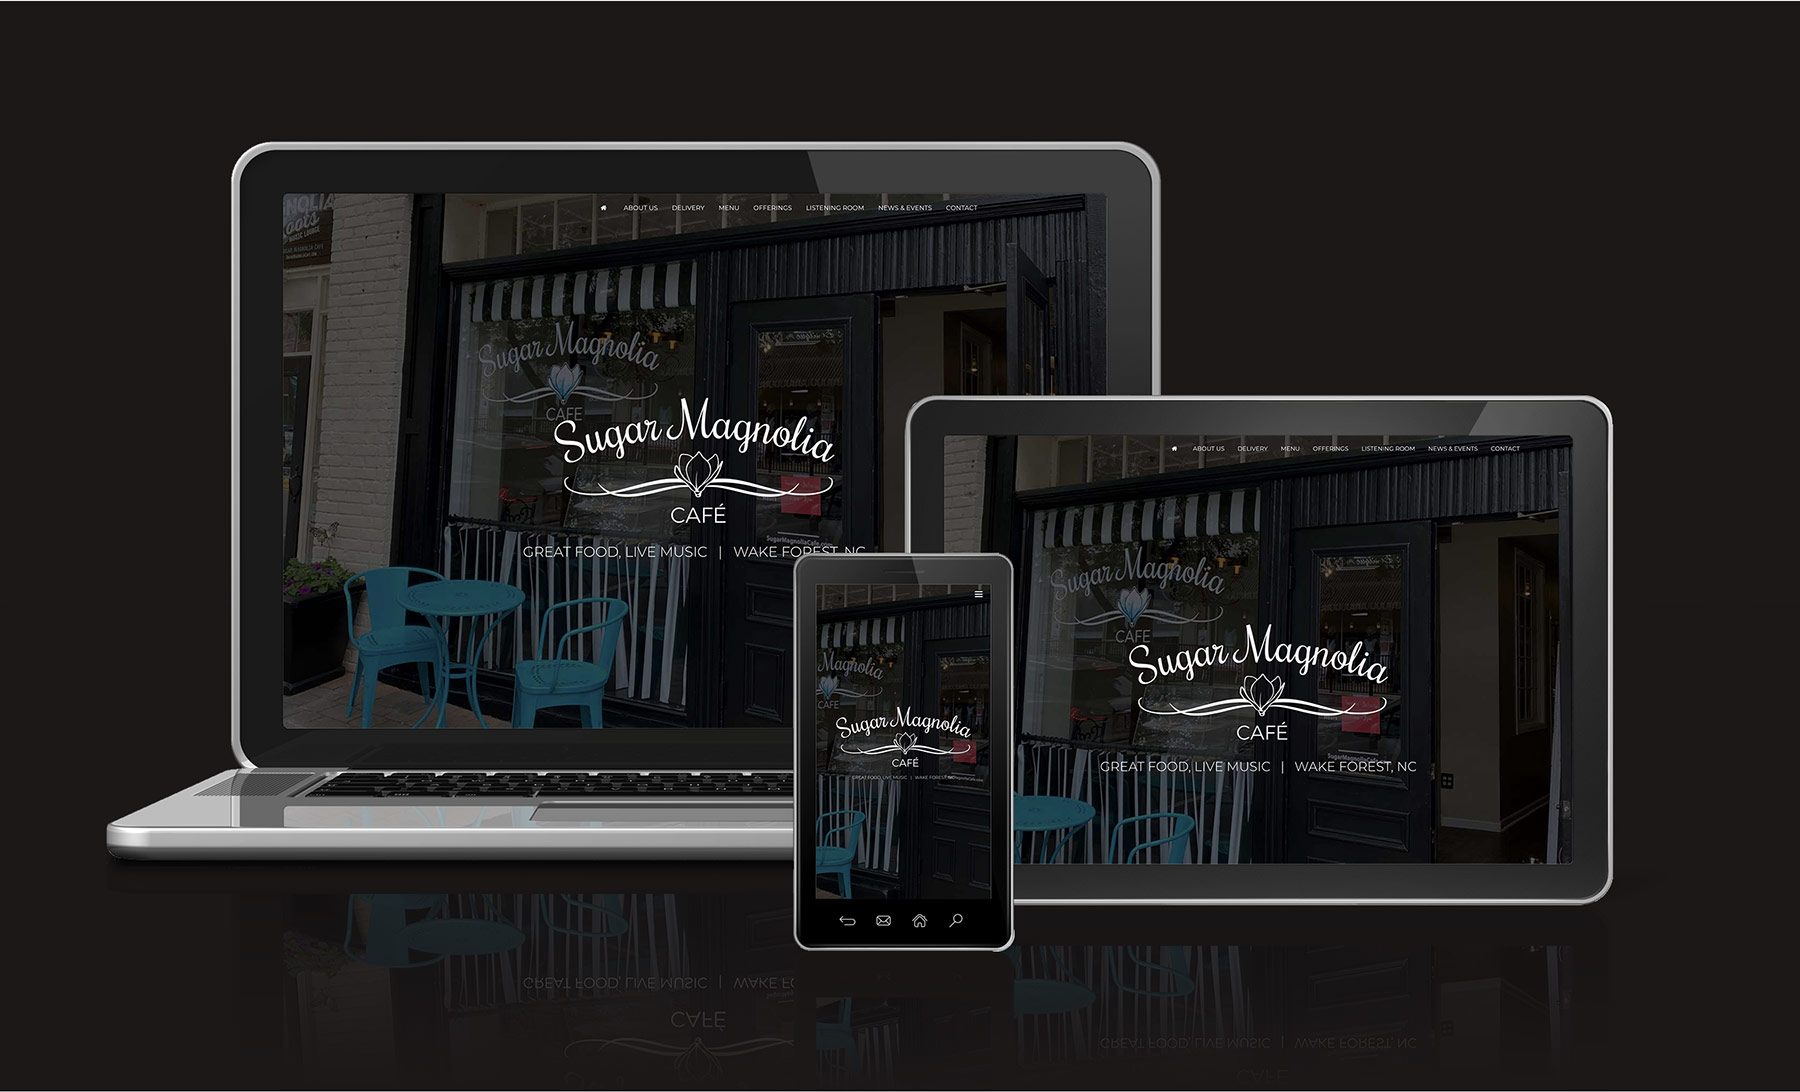 Sugar Magnolia Cafe Website - Desktop, Tablet, and Smartphone devices with website on screens